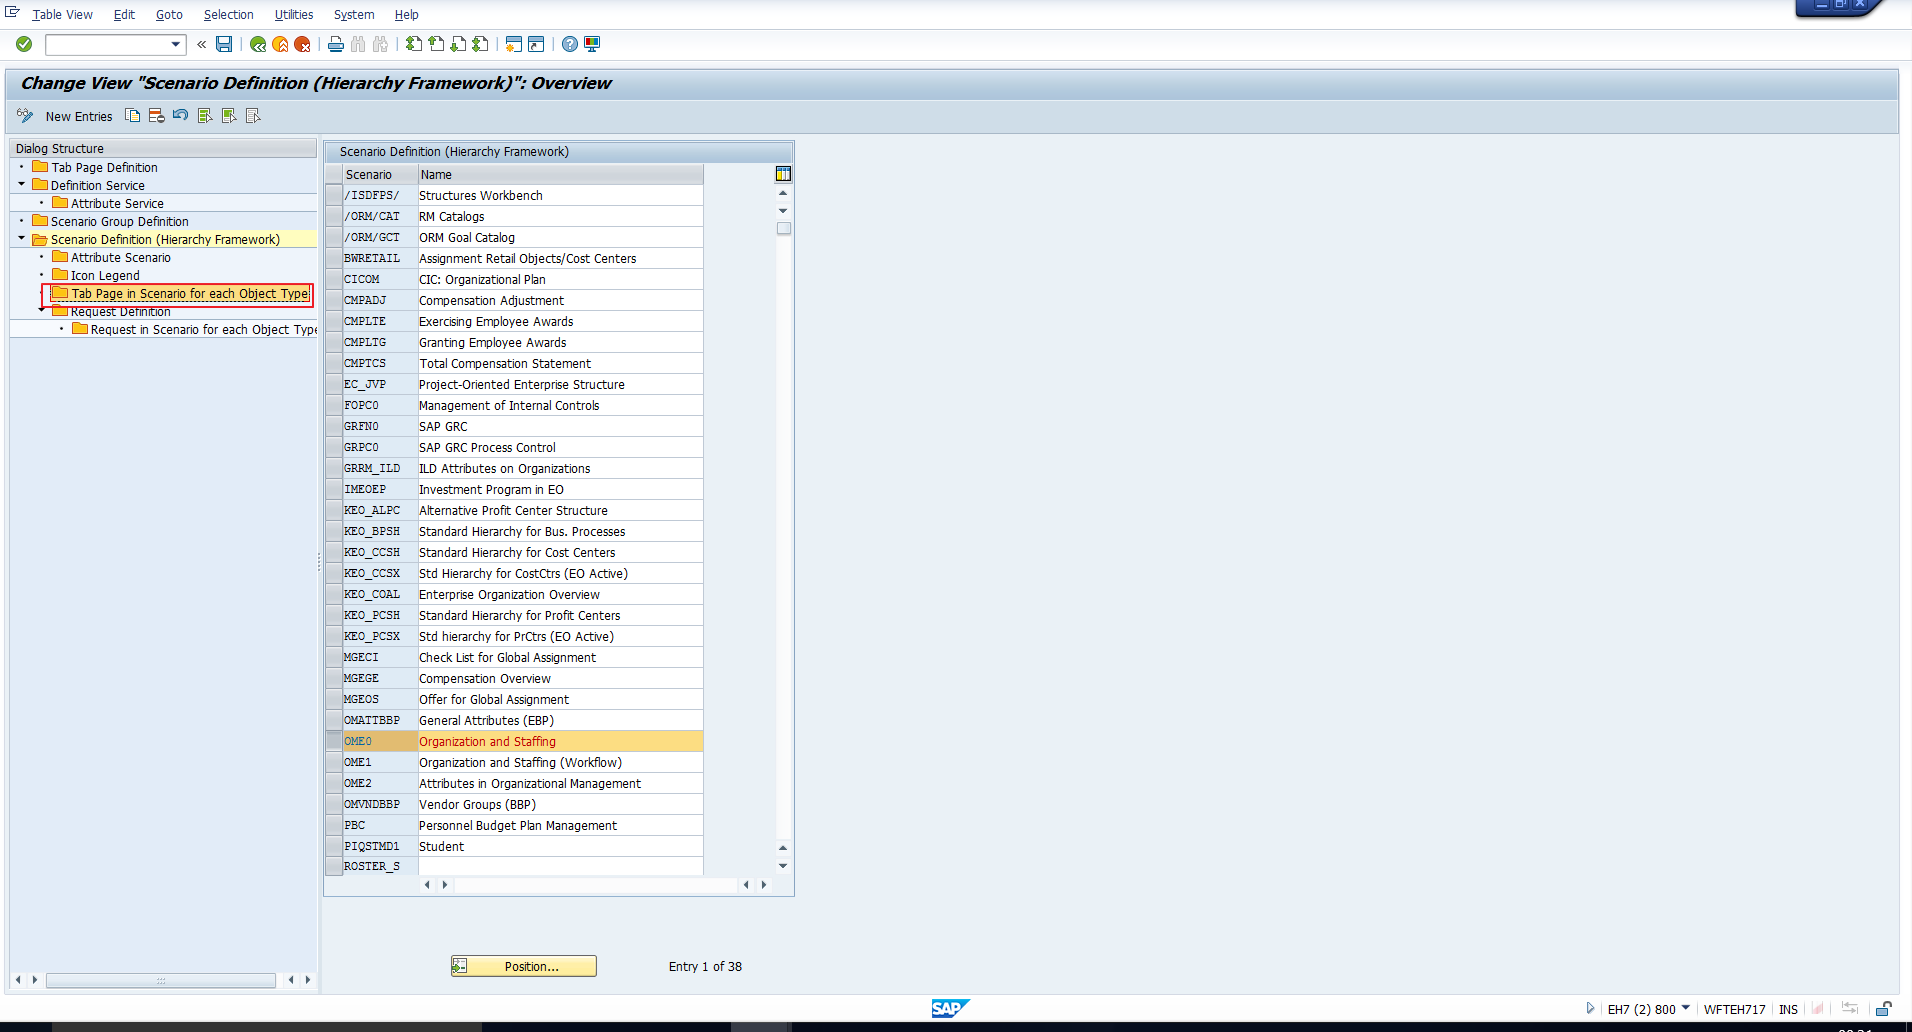 Select Tab Page in Scenario Structure Folder